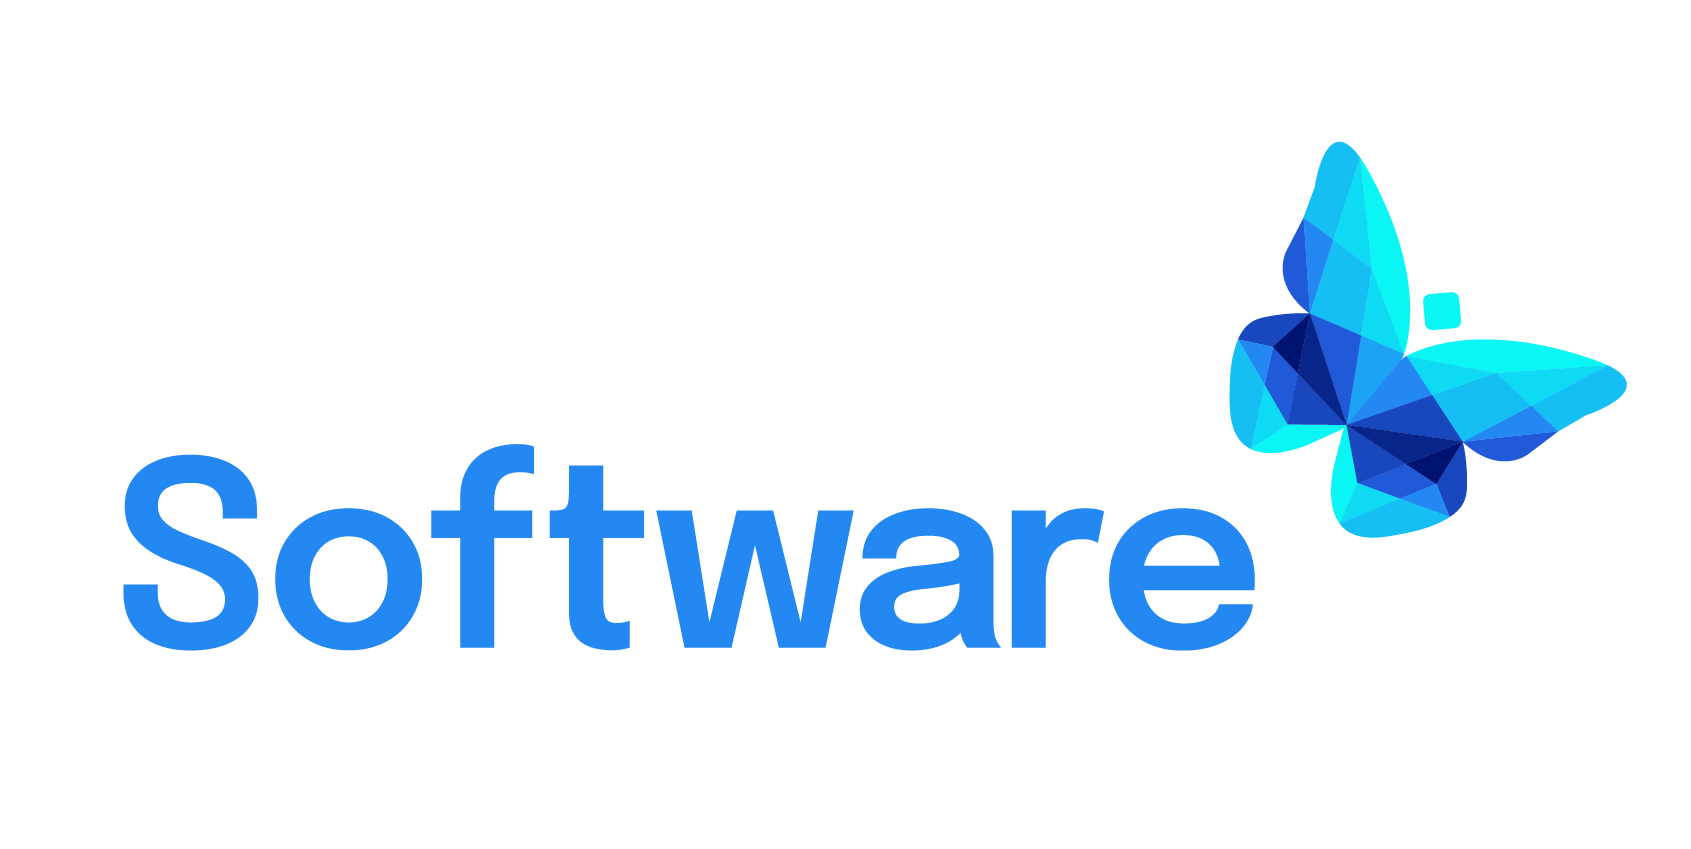 synergis-software-full-color-dark-Registered